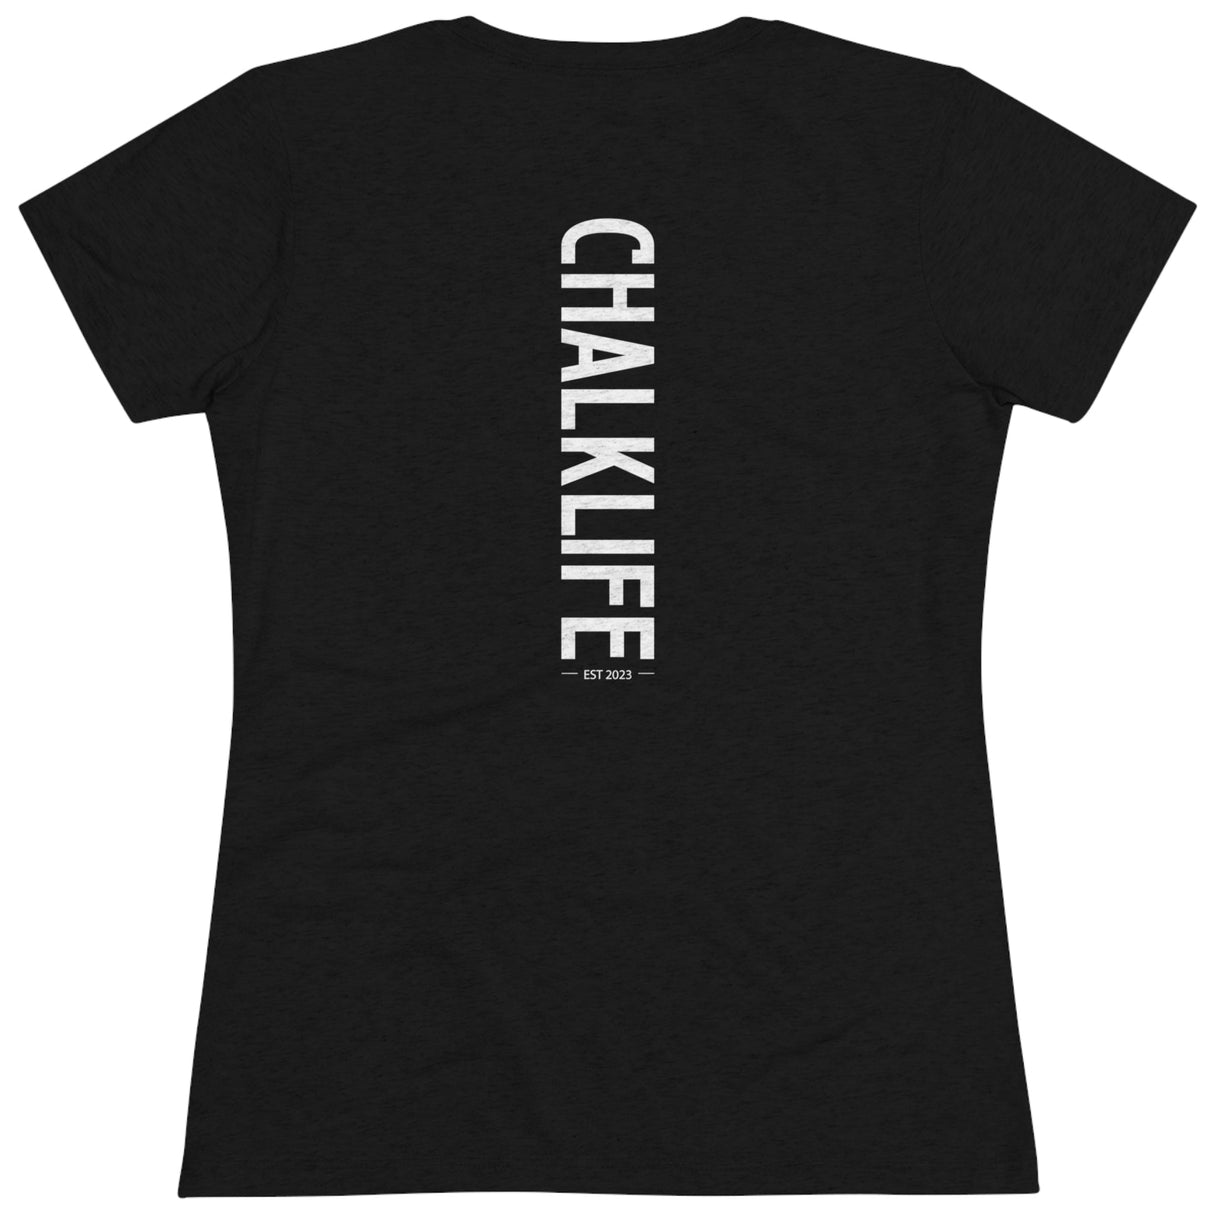 ChalkLife "Beam Trio" Fitted T-Shirt - Chalklife, LLC